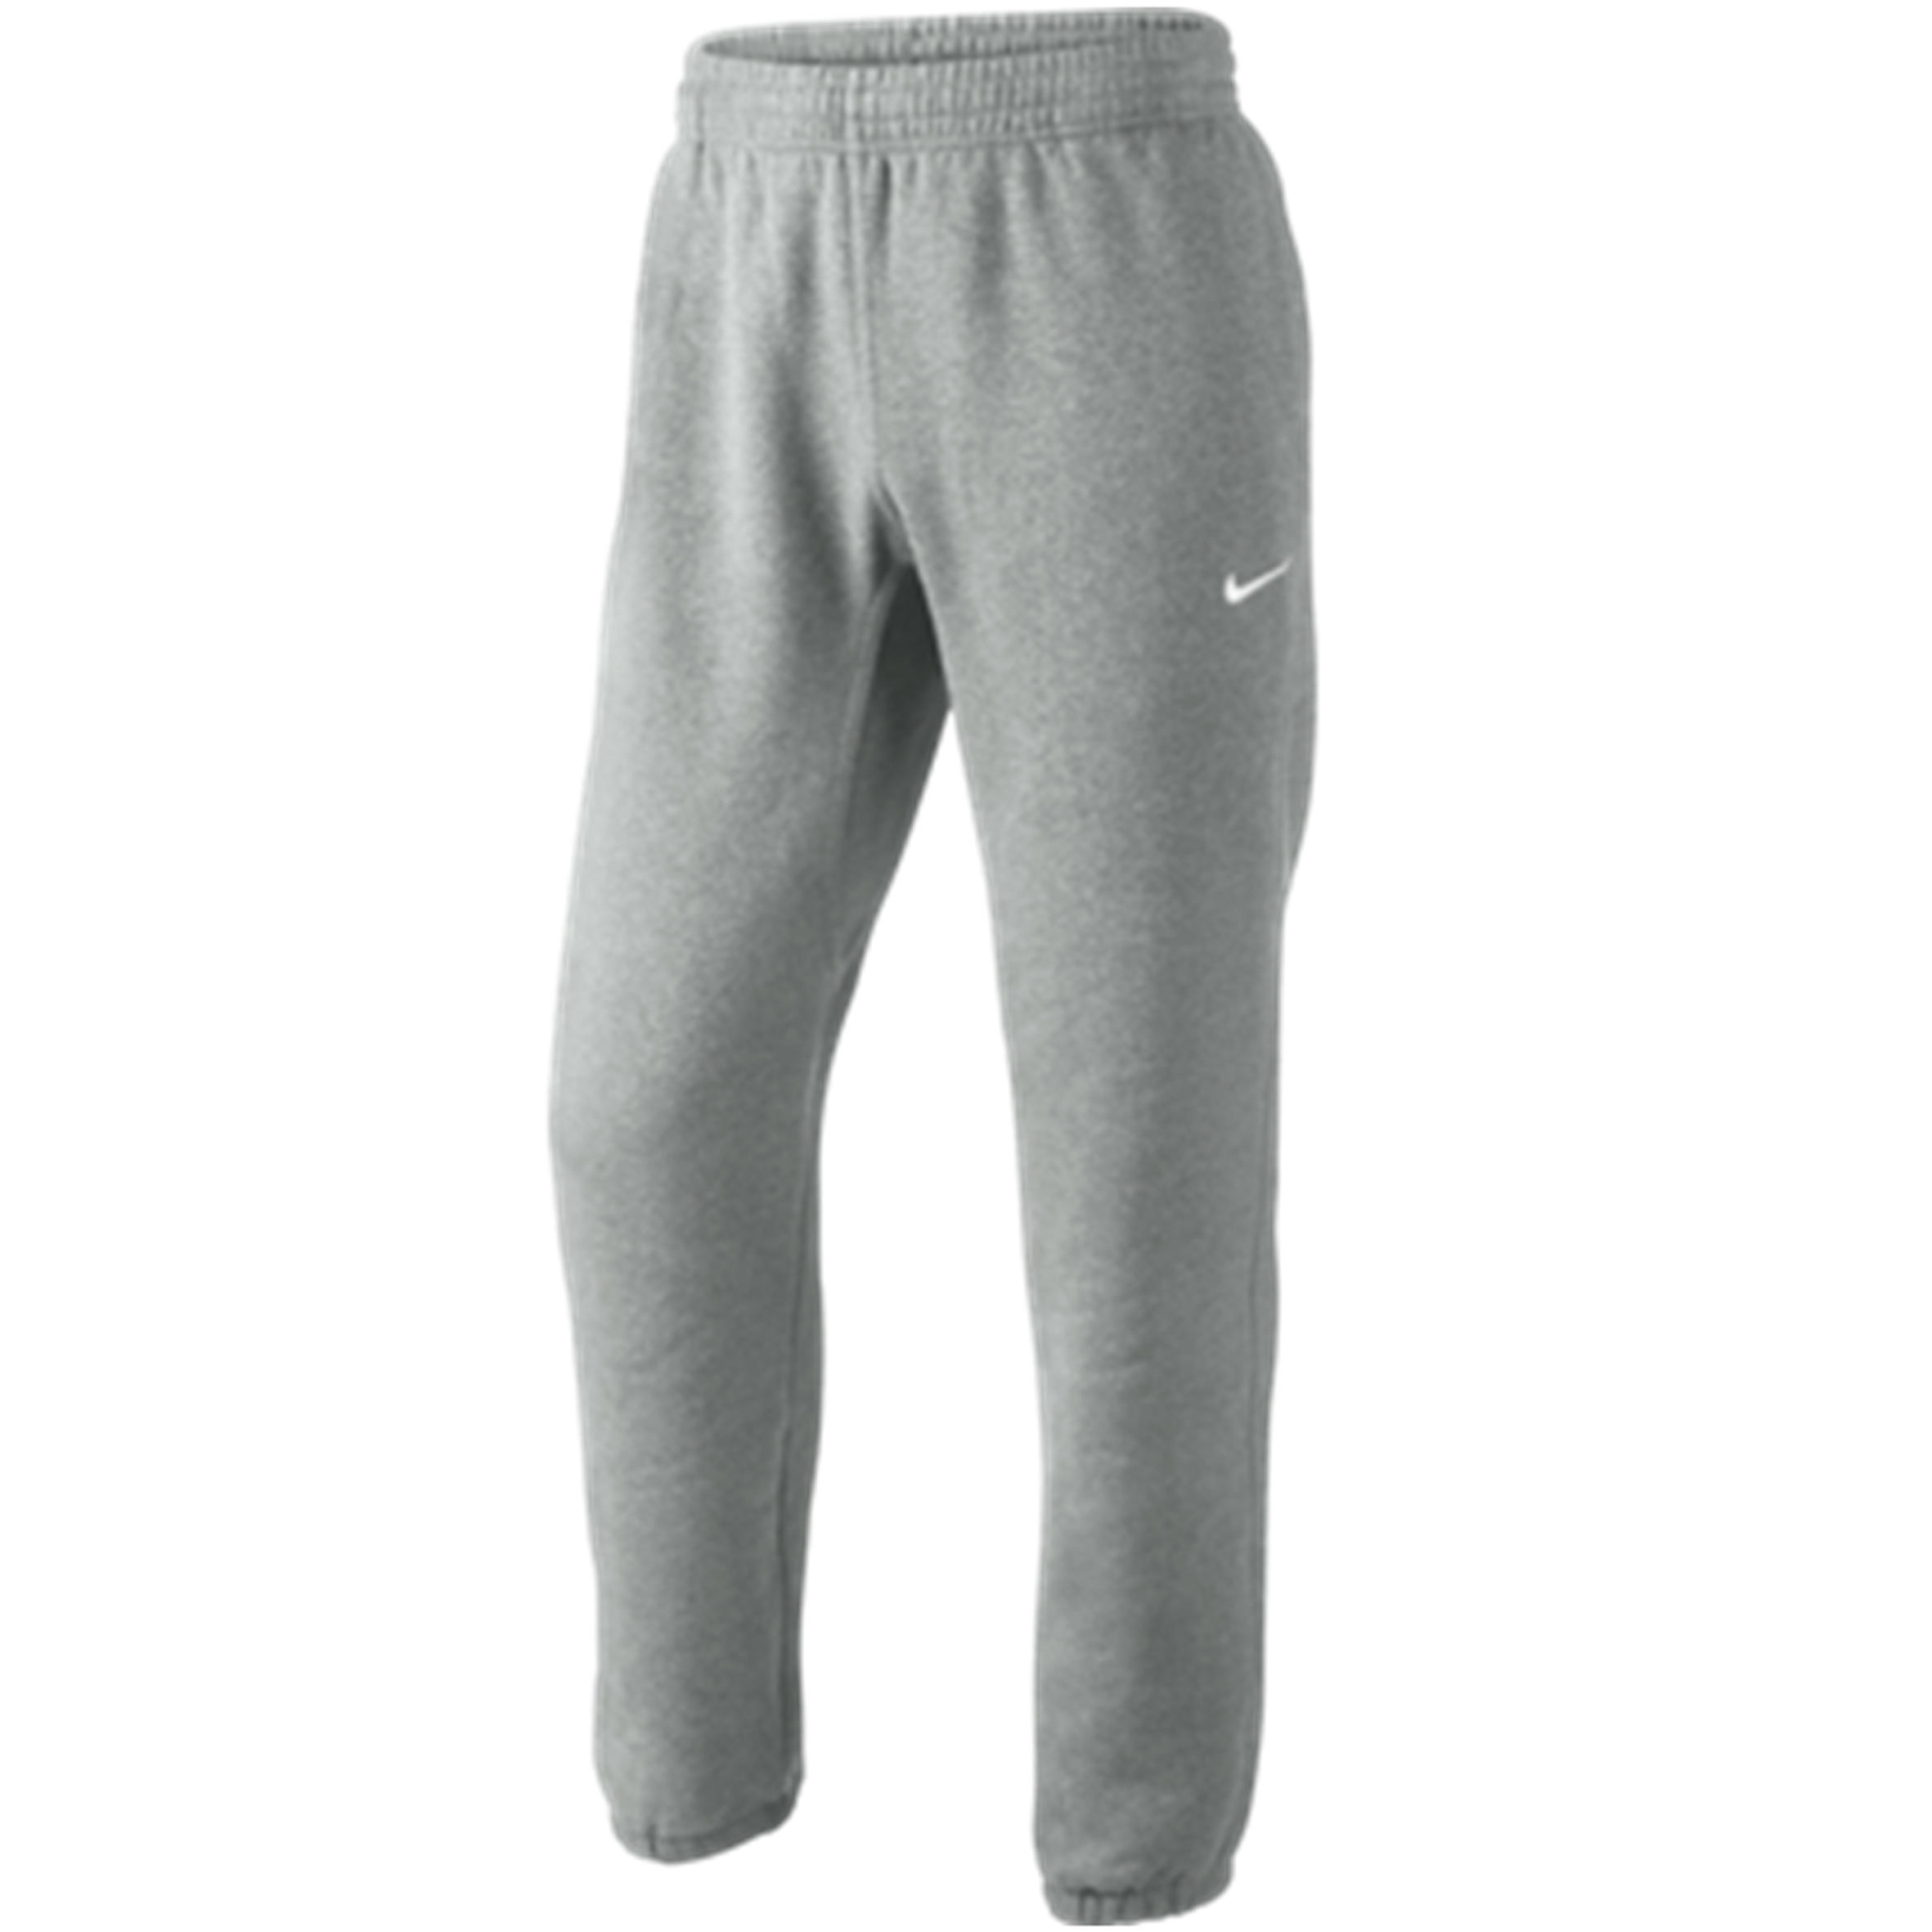 Nike Fitness Bottoms - Grey